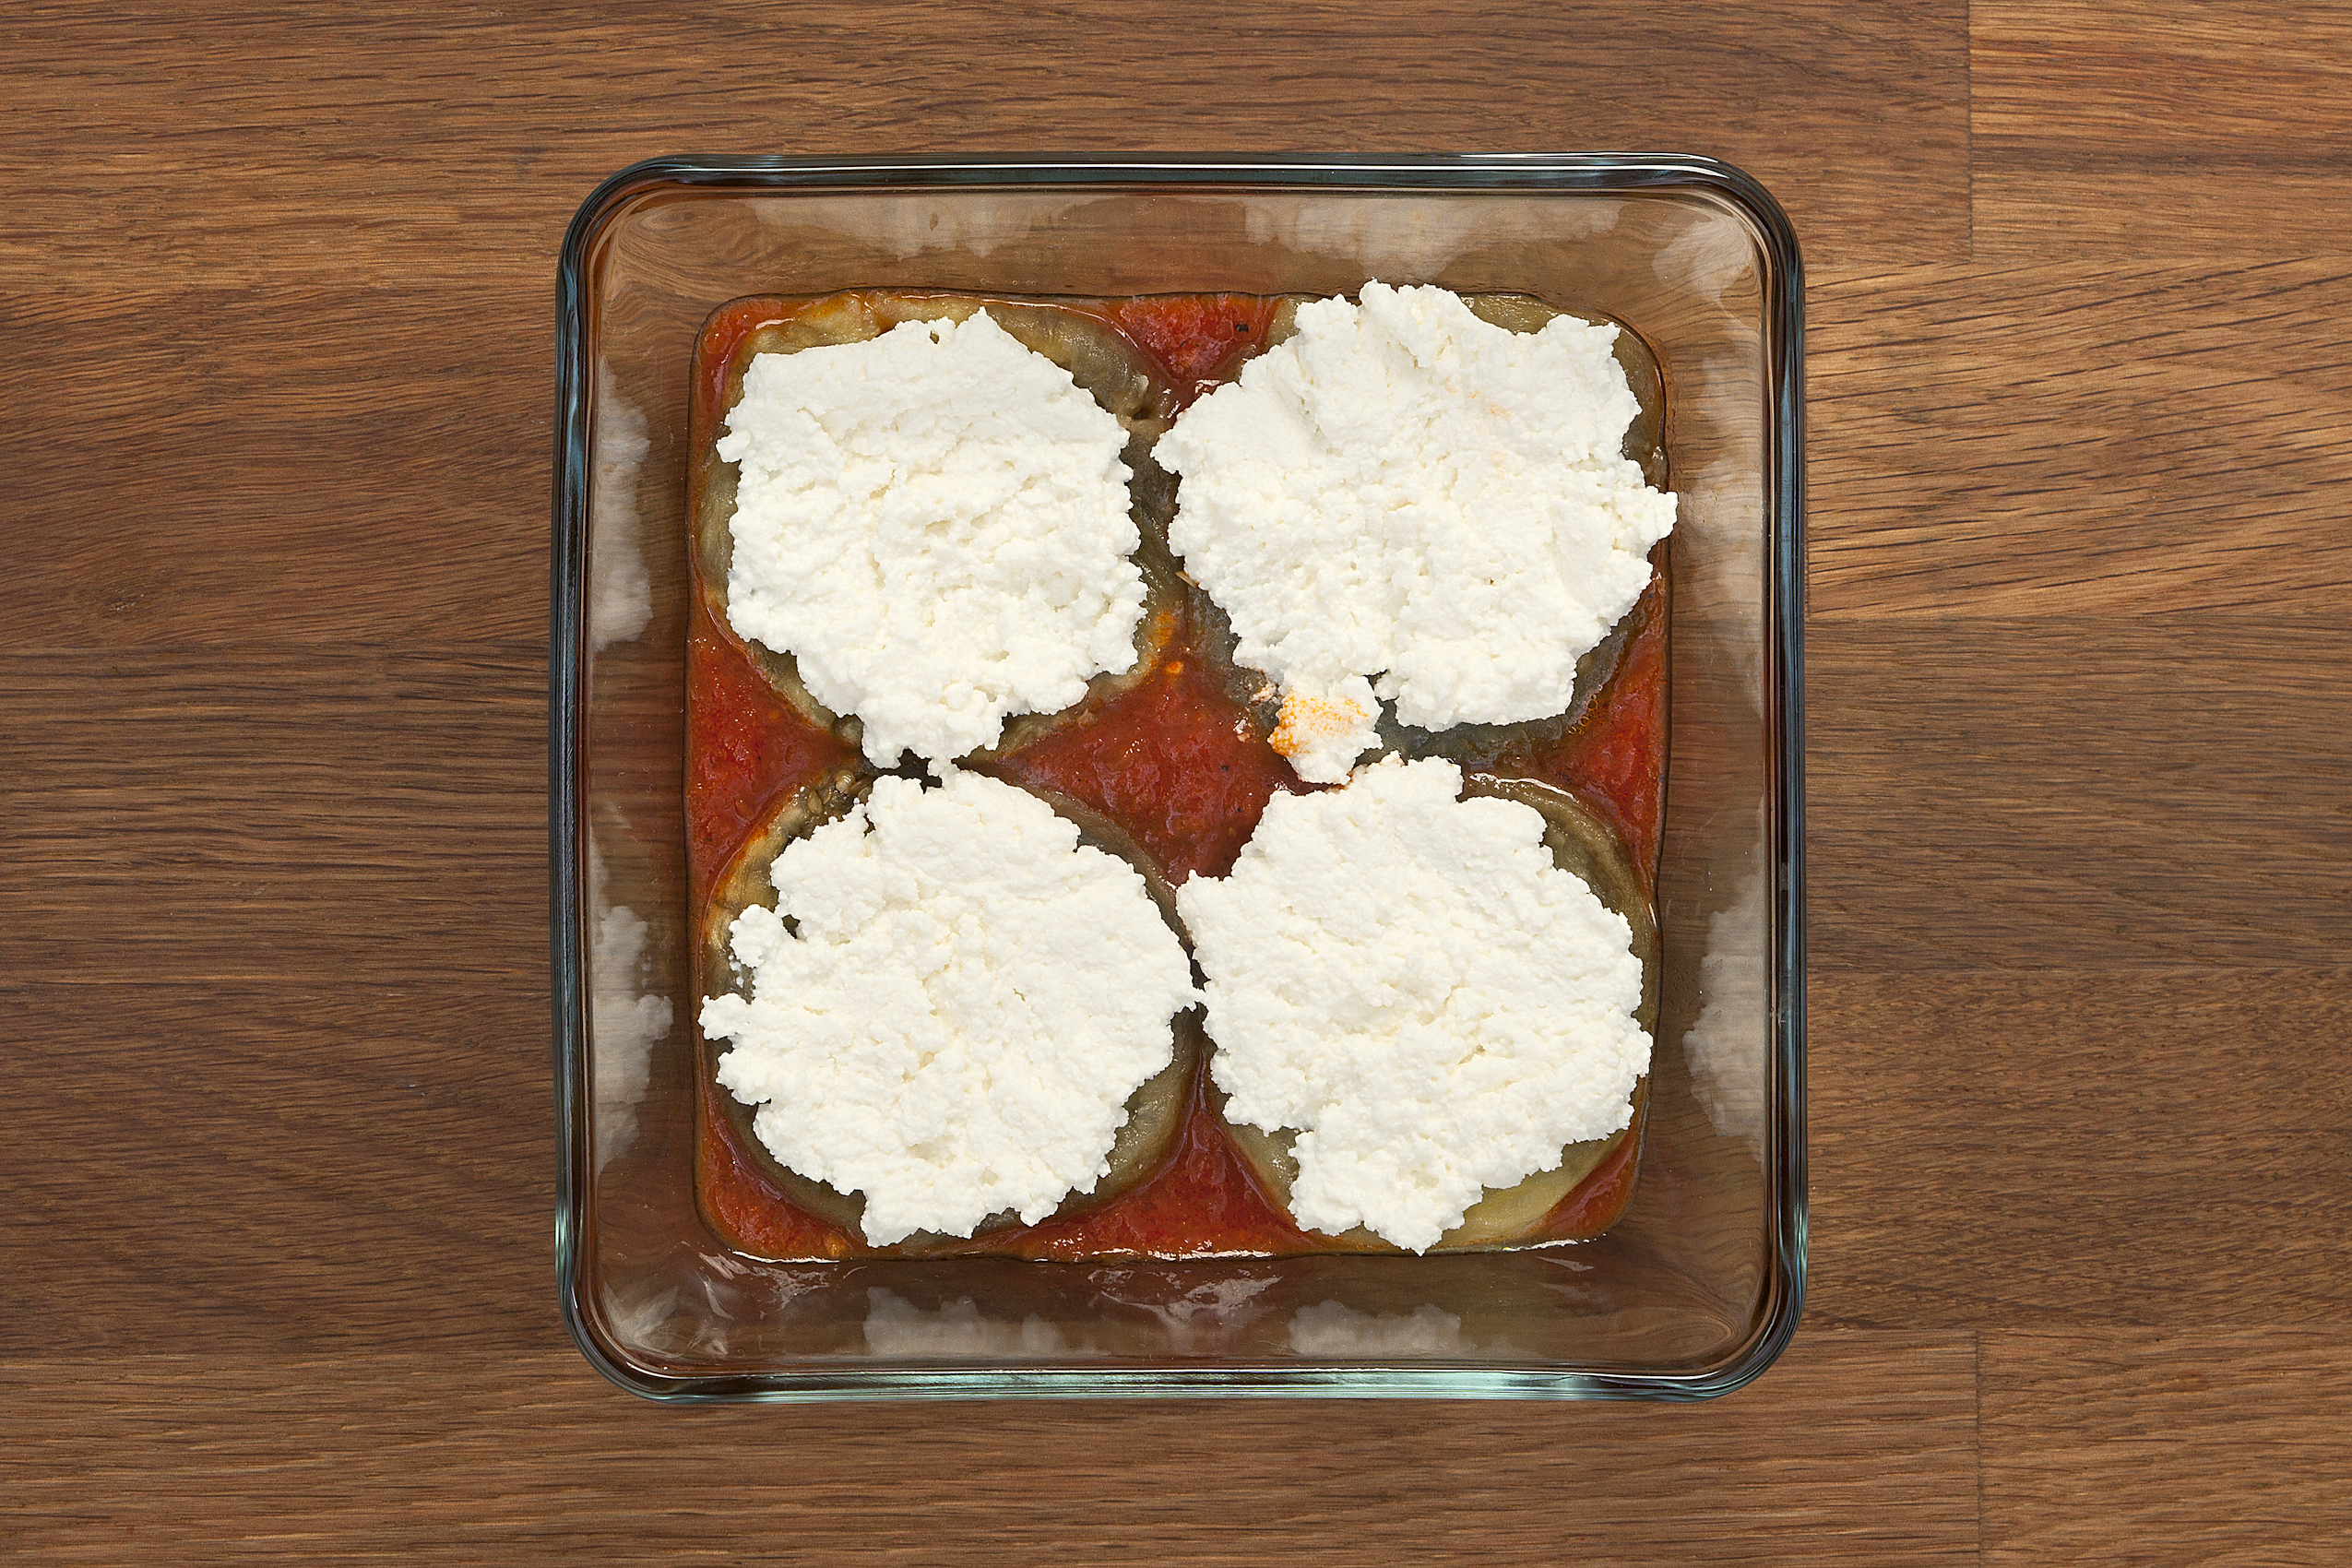 Microwaved Eggplant Parmesan, Step 6A